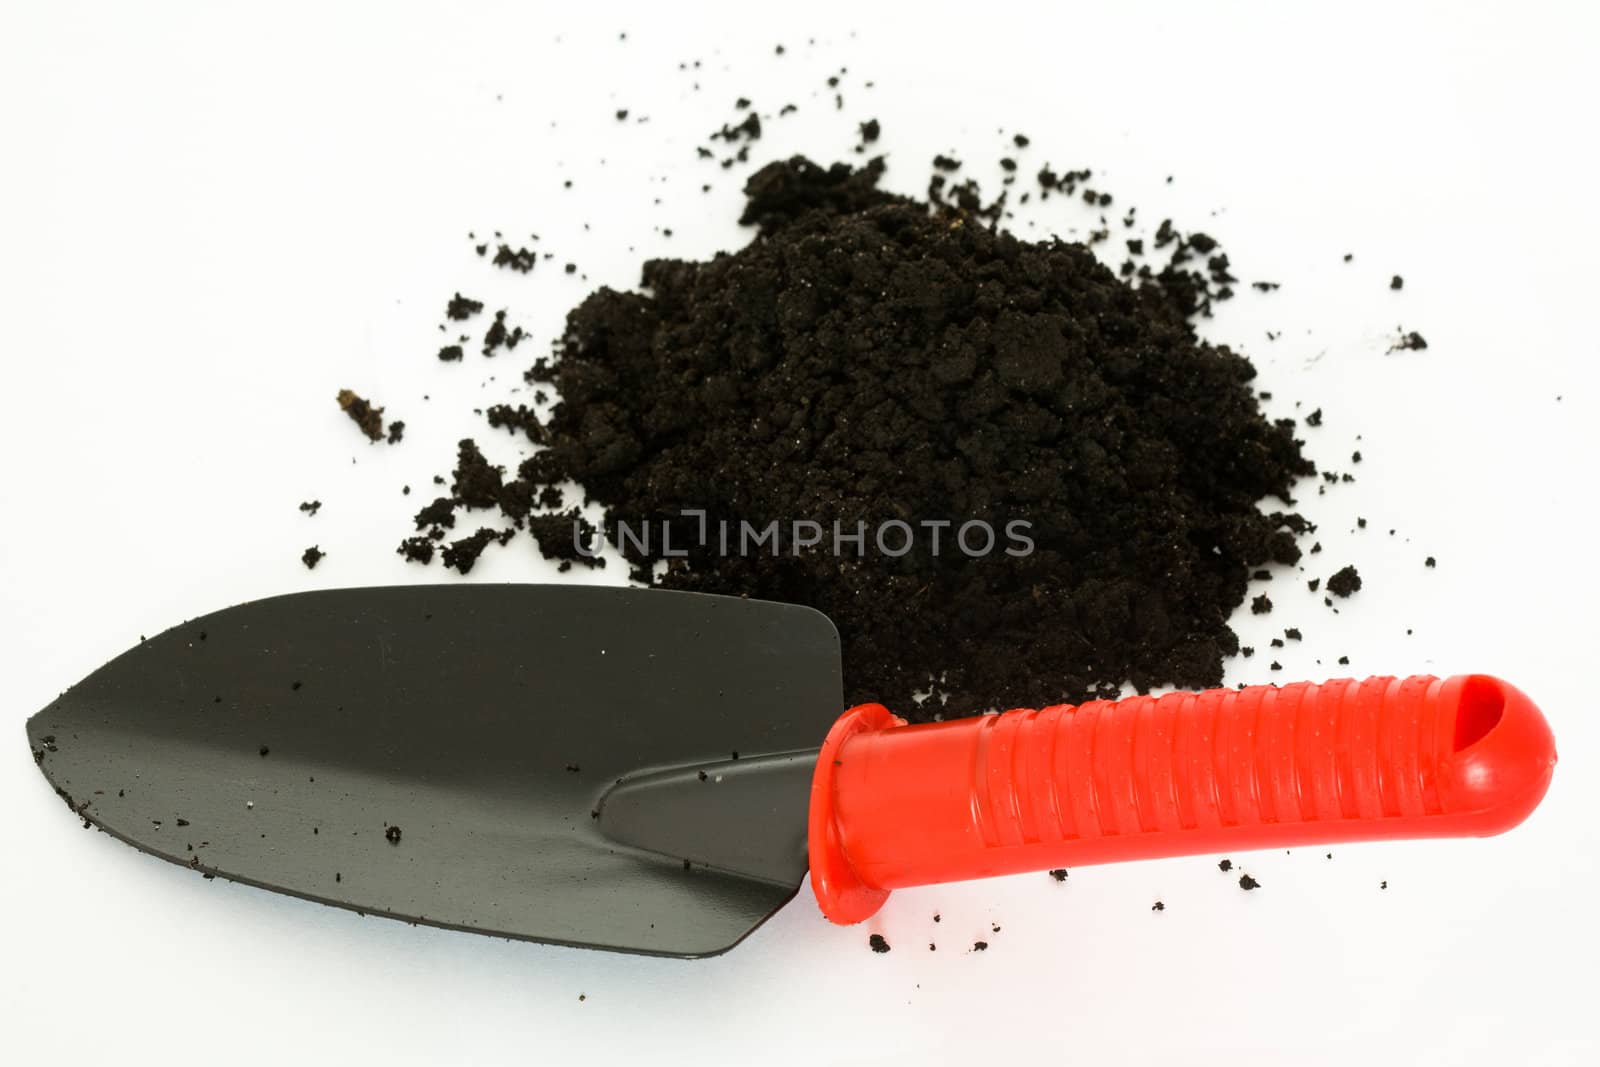 Stock photo: an image of a garden shovel and ground